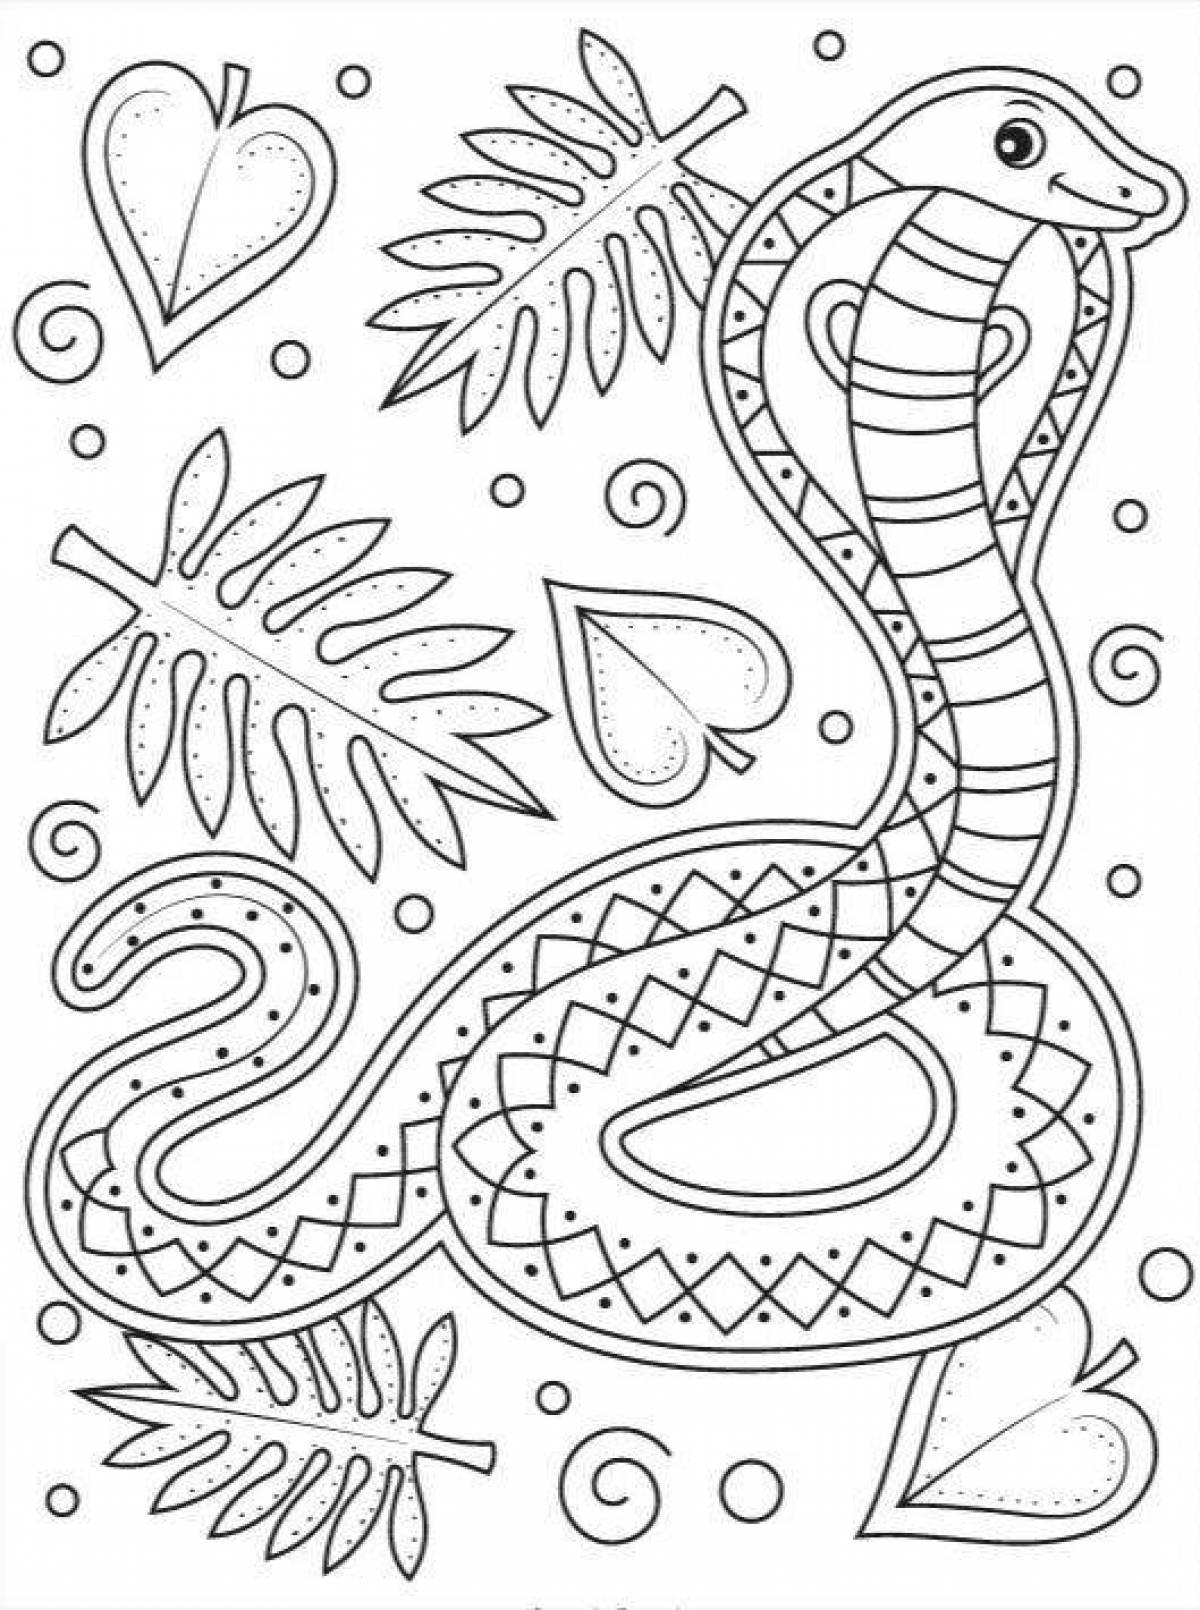 Invitation coloring snake antistress